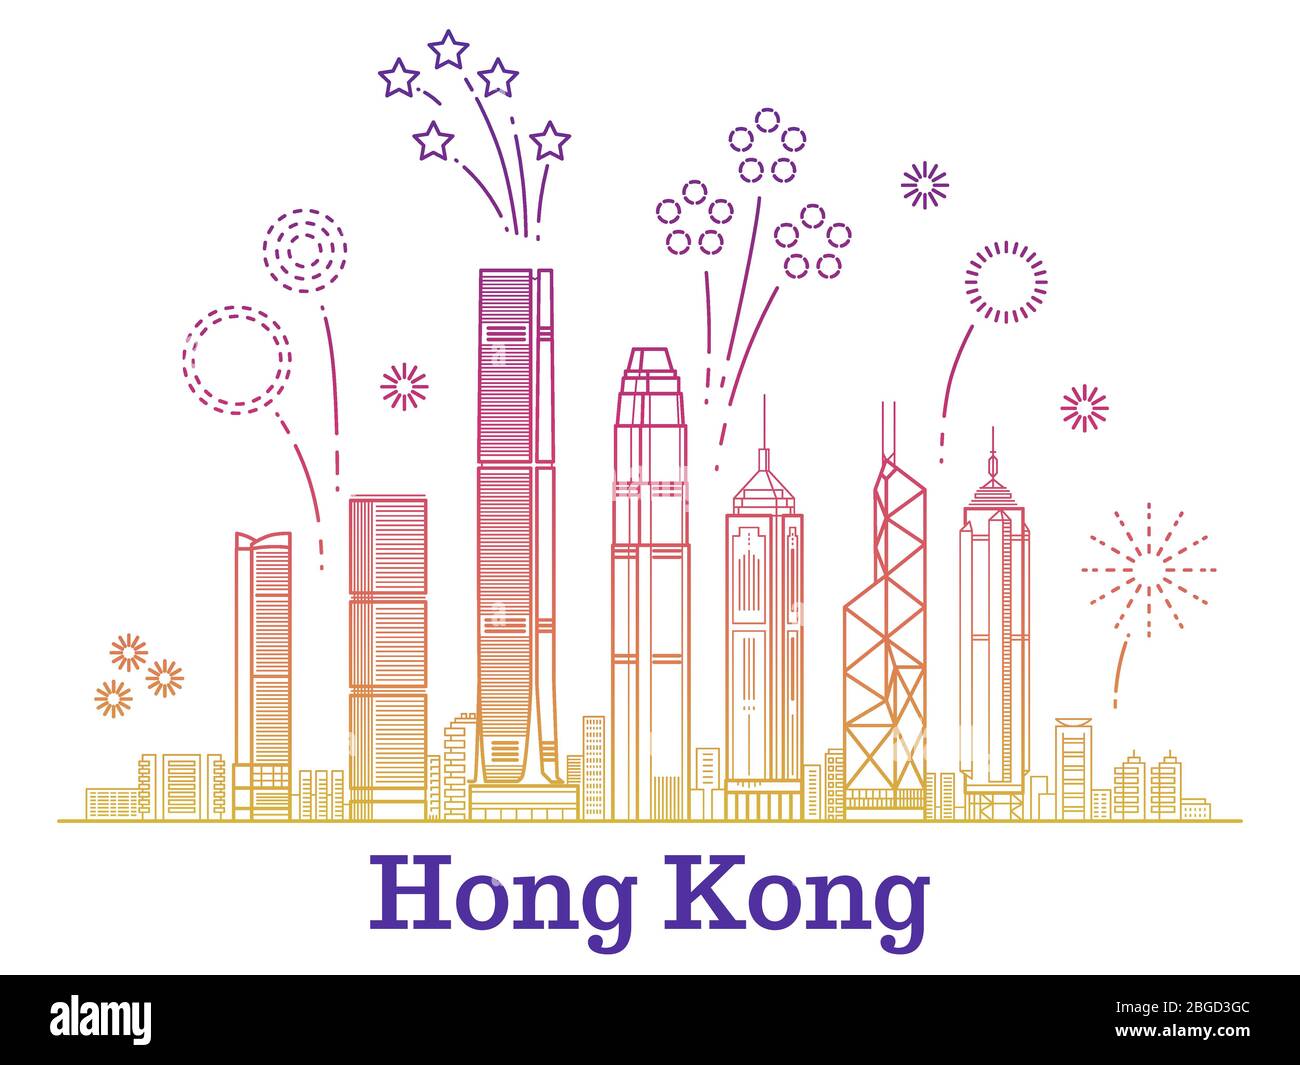 Hong kong City Vektor Panorama mit bunten festlichen Feuerwerk. Hong kong Gebäude Wolkenkratzer Illustration Stock Vektor